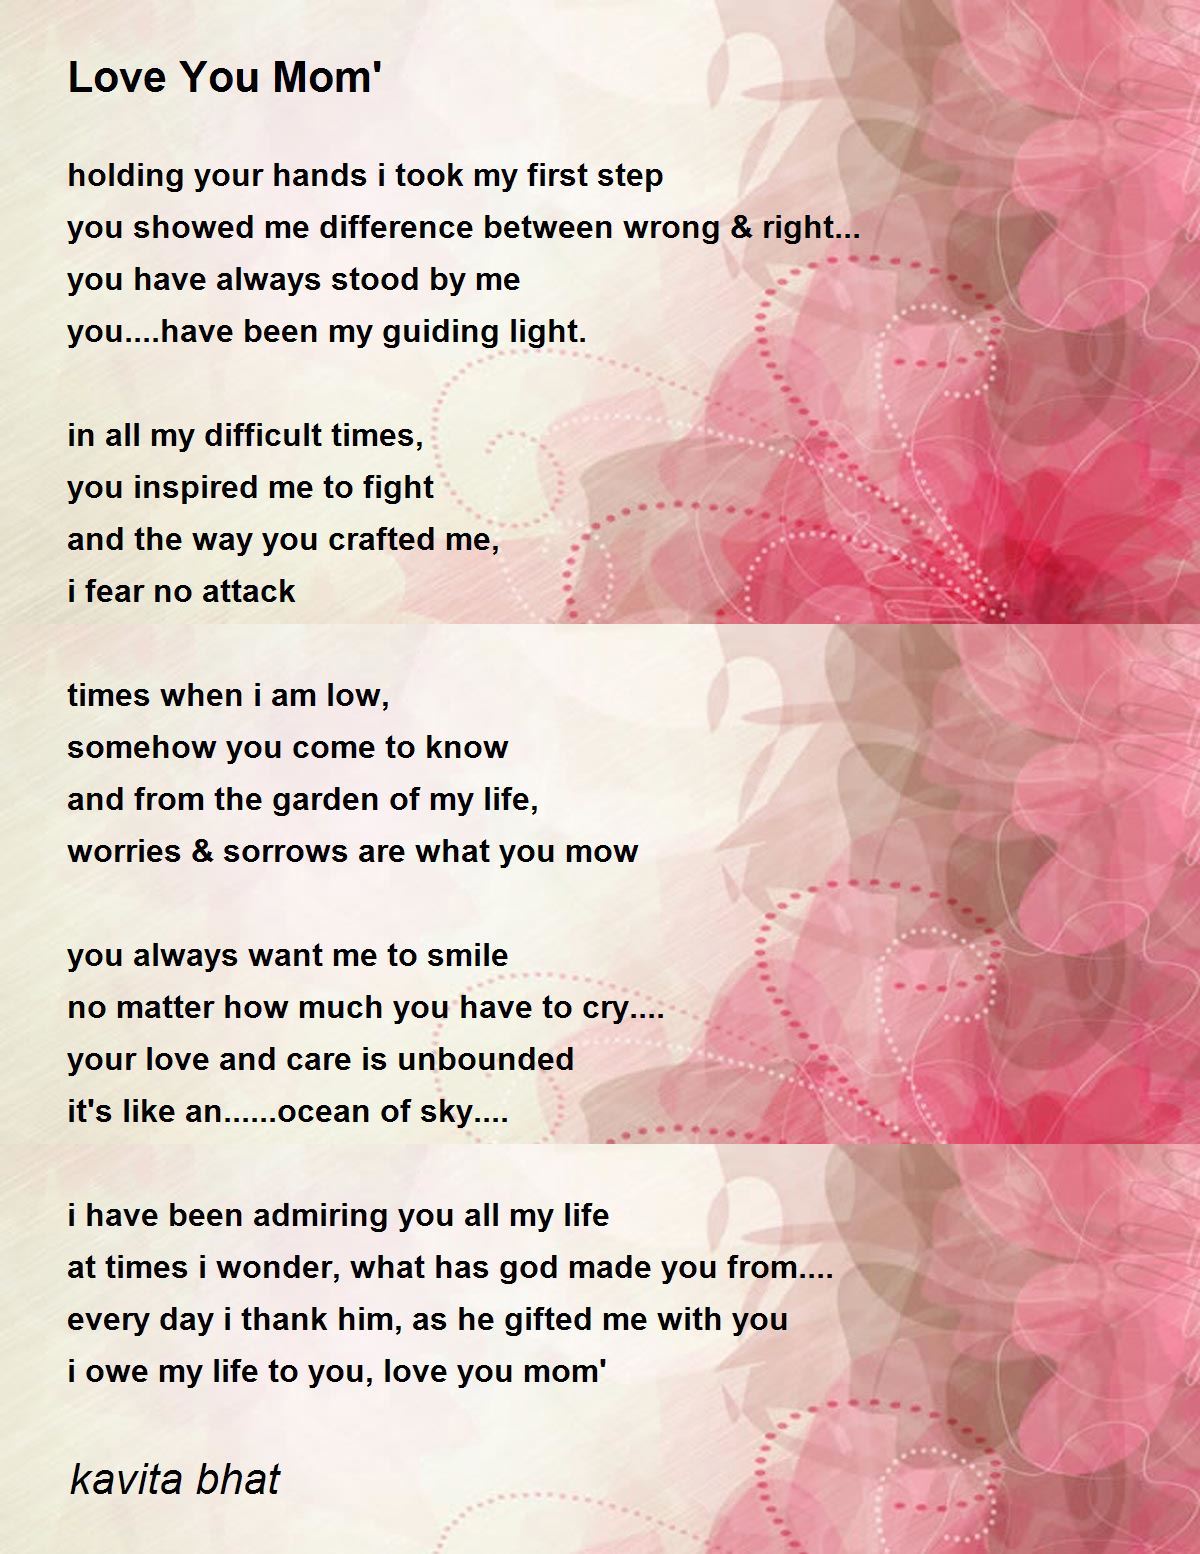 Love You Mom By Kavita Bhat Love You Mom Poem 